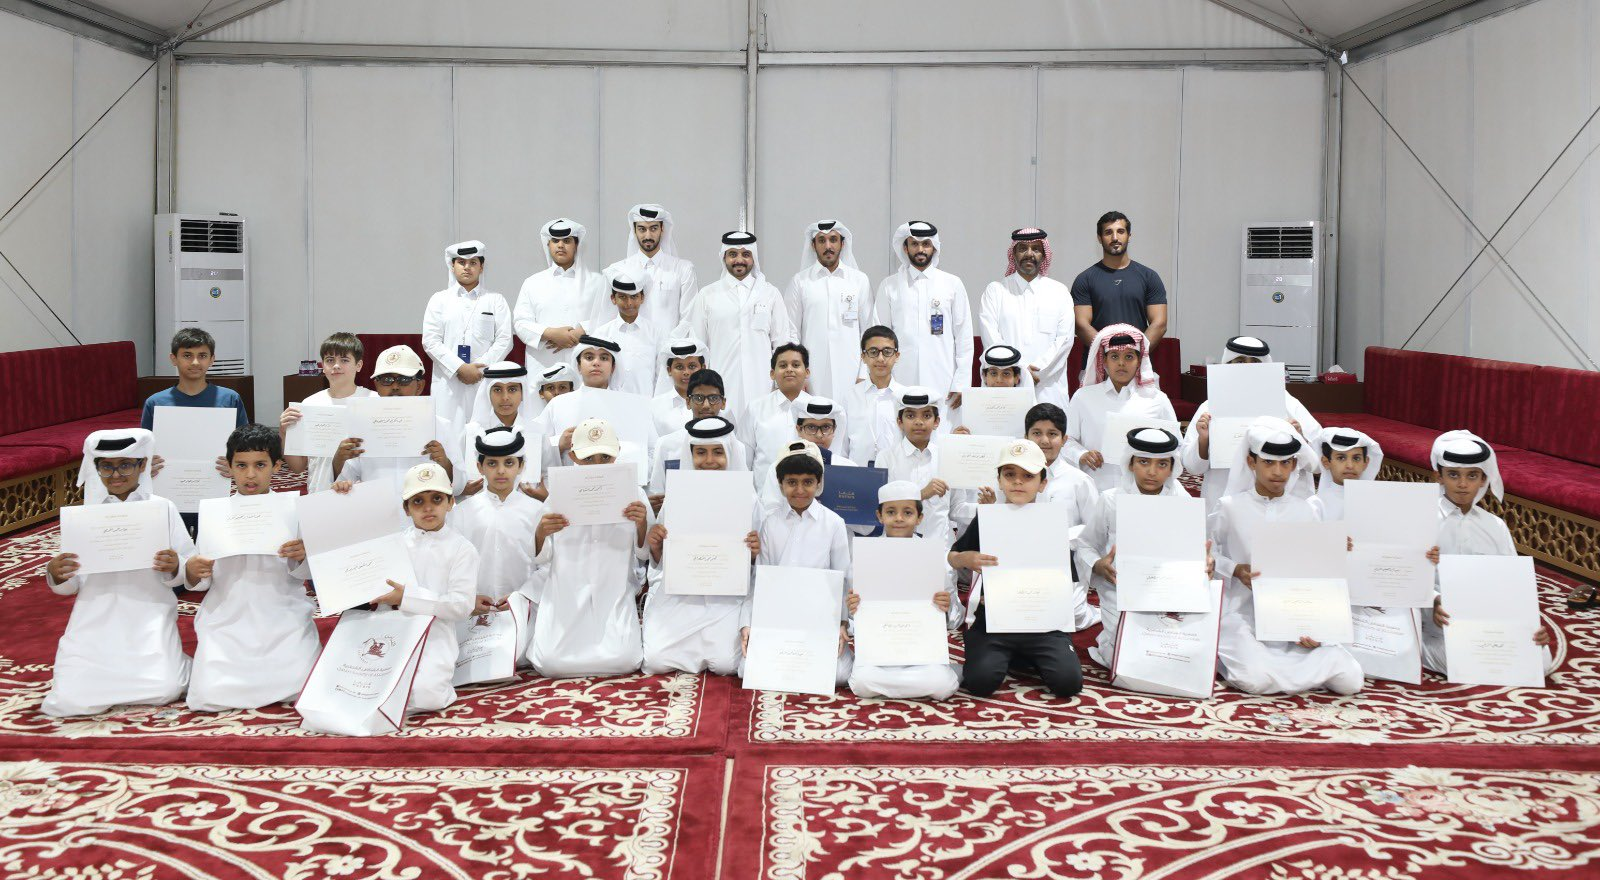 New Group of Participants to Join Katara Summer Camp Activities Next Week